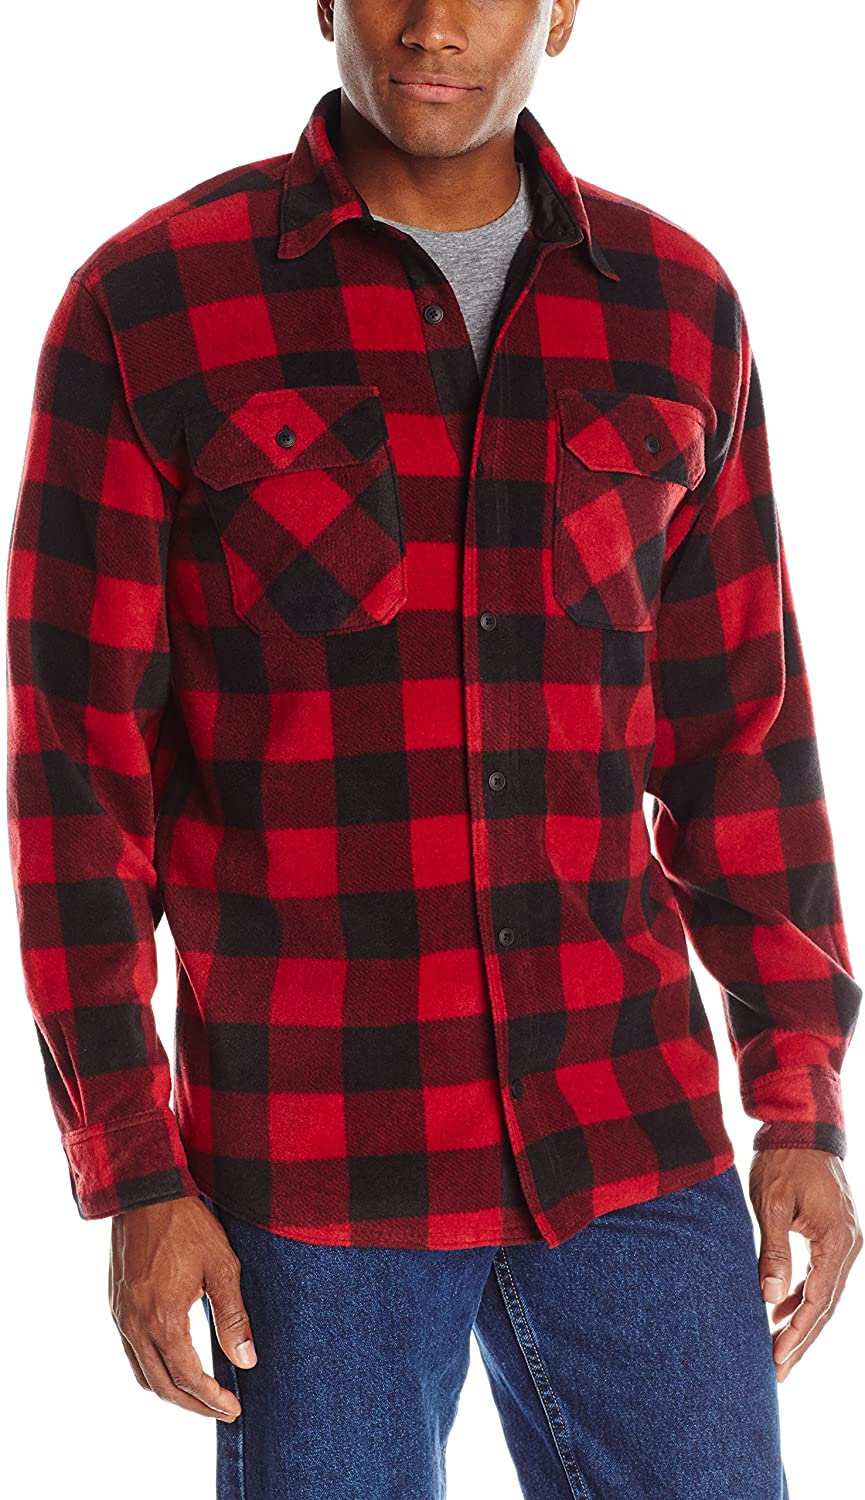 Wrangler Authentics Men's Long Sleeve Heavy Weight Fleece Shirt | eBay